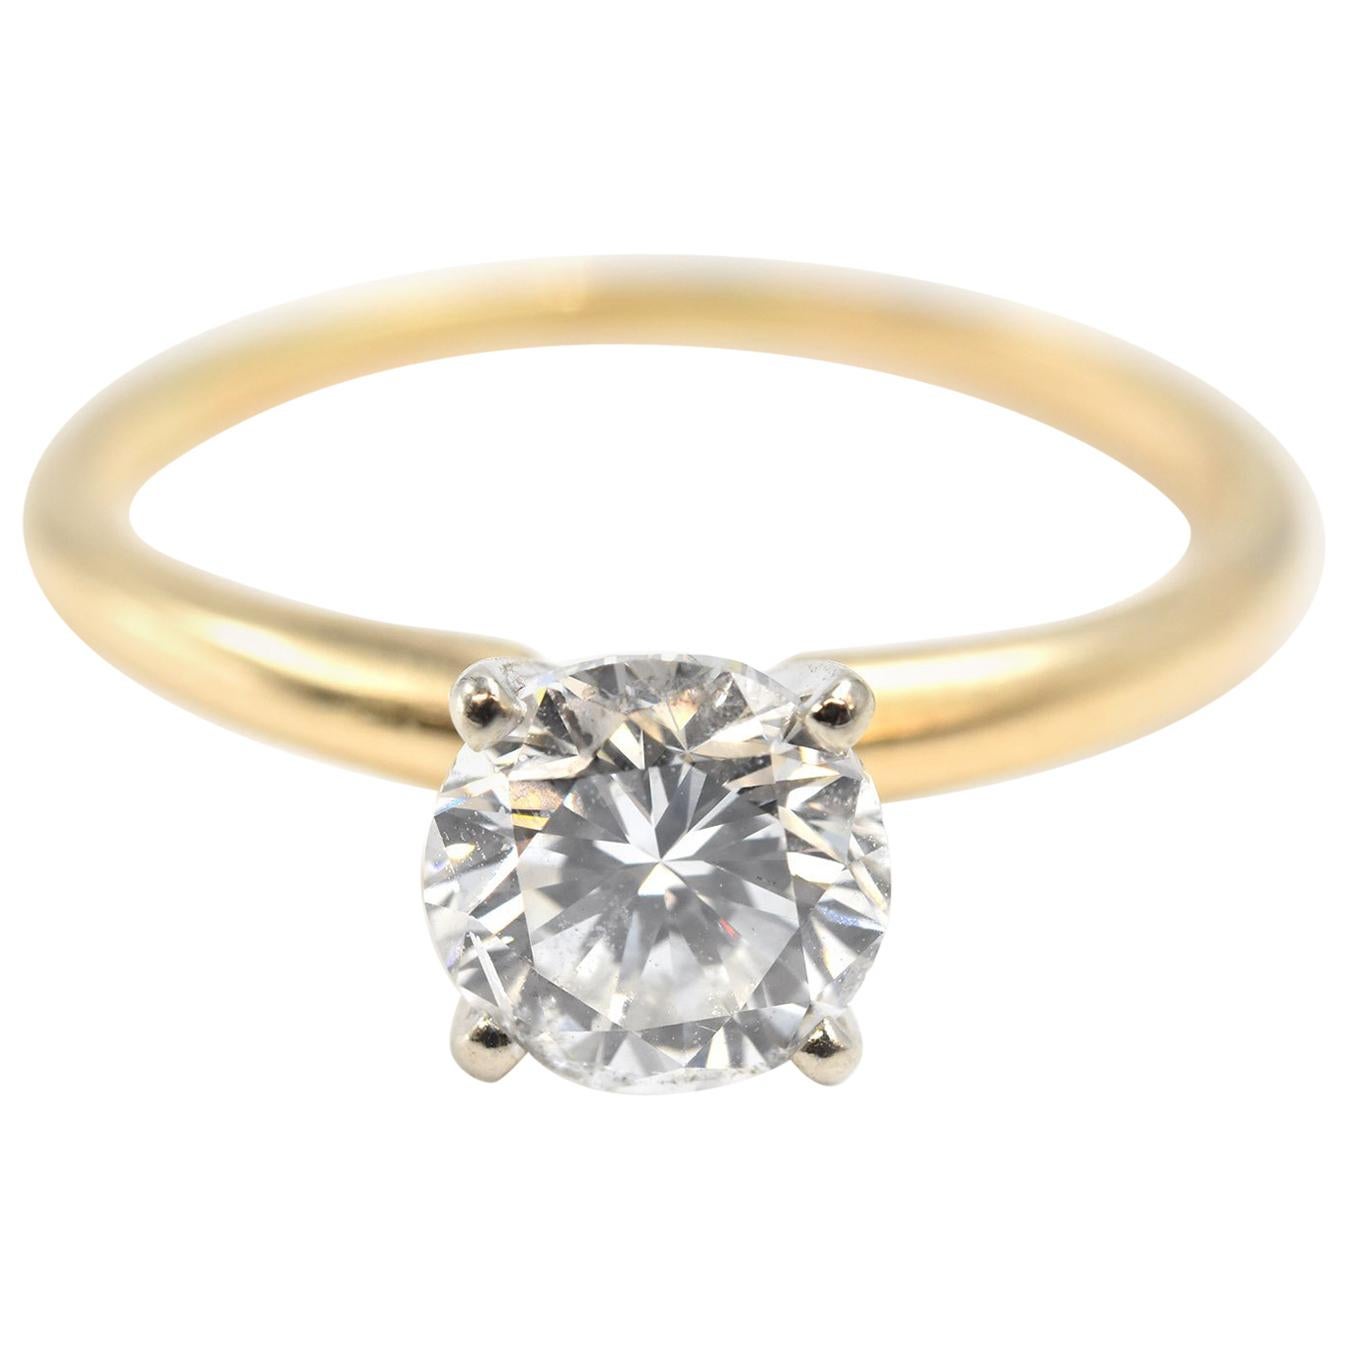 1.04 Carat Round Brilliant Cut Diamond 14k Yellow Gold Solitaire Engagement Ring